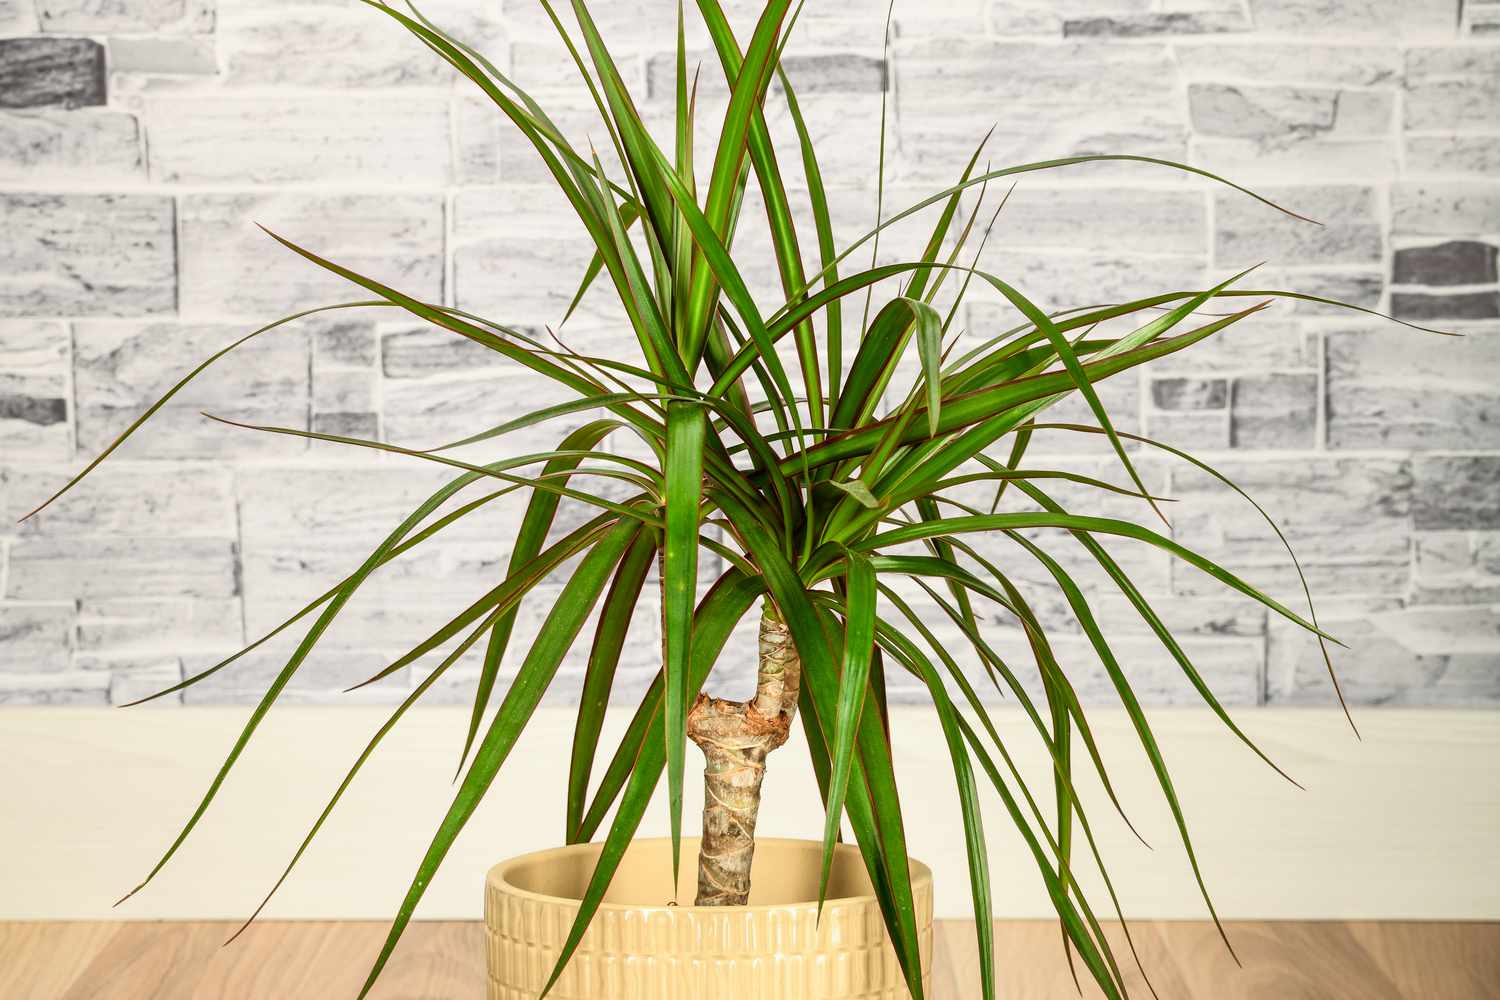 What kind of plant looks like a palm tree?